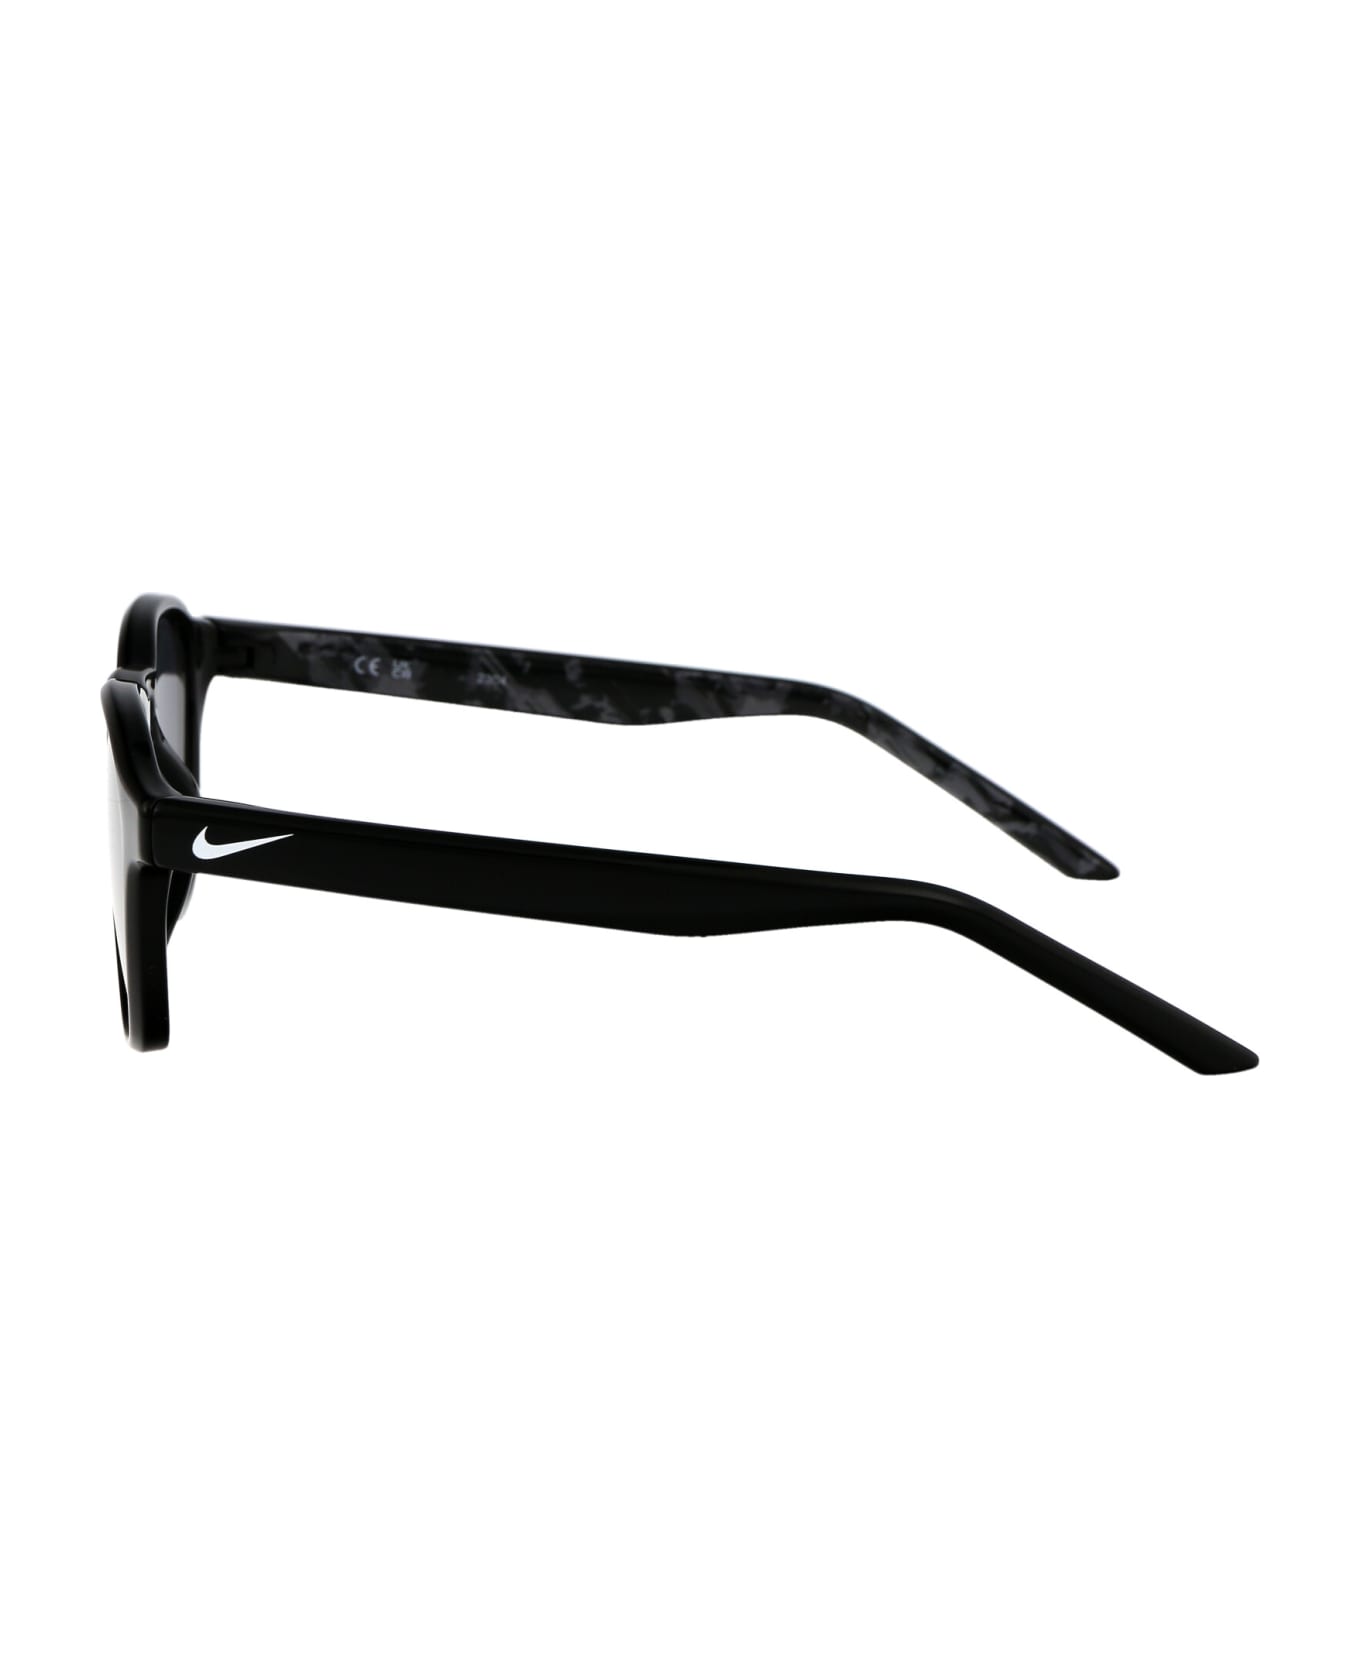 Nike Smash Sunglasses - 010 BLACK NOIR  サングラス